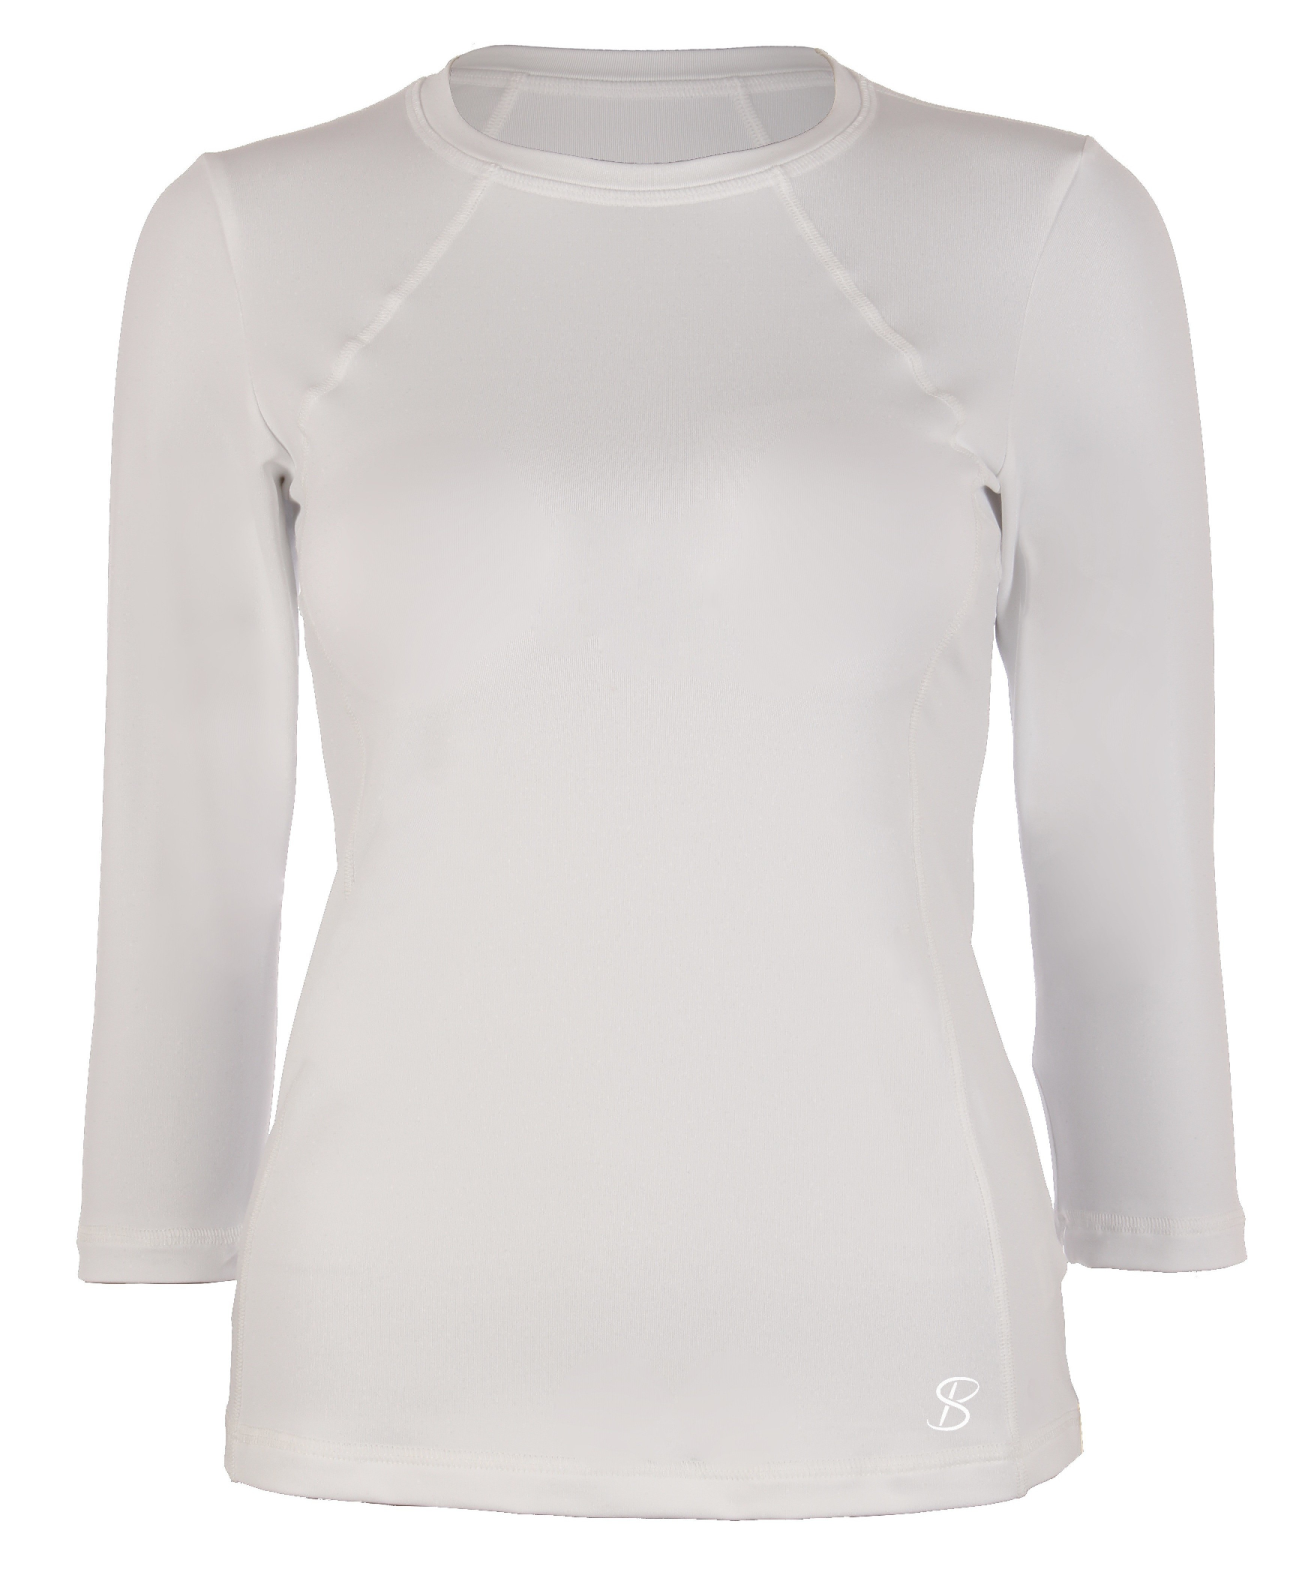 Sofibella Women&amp;apos;s Classic 3/4 Sleeve Tennis Top (White)